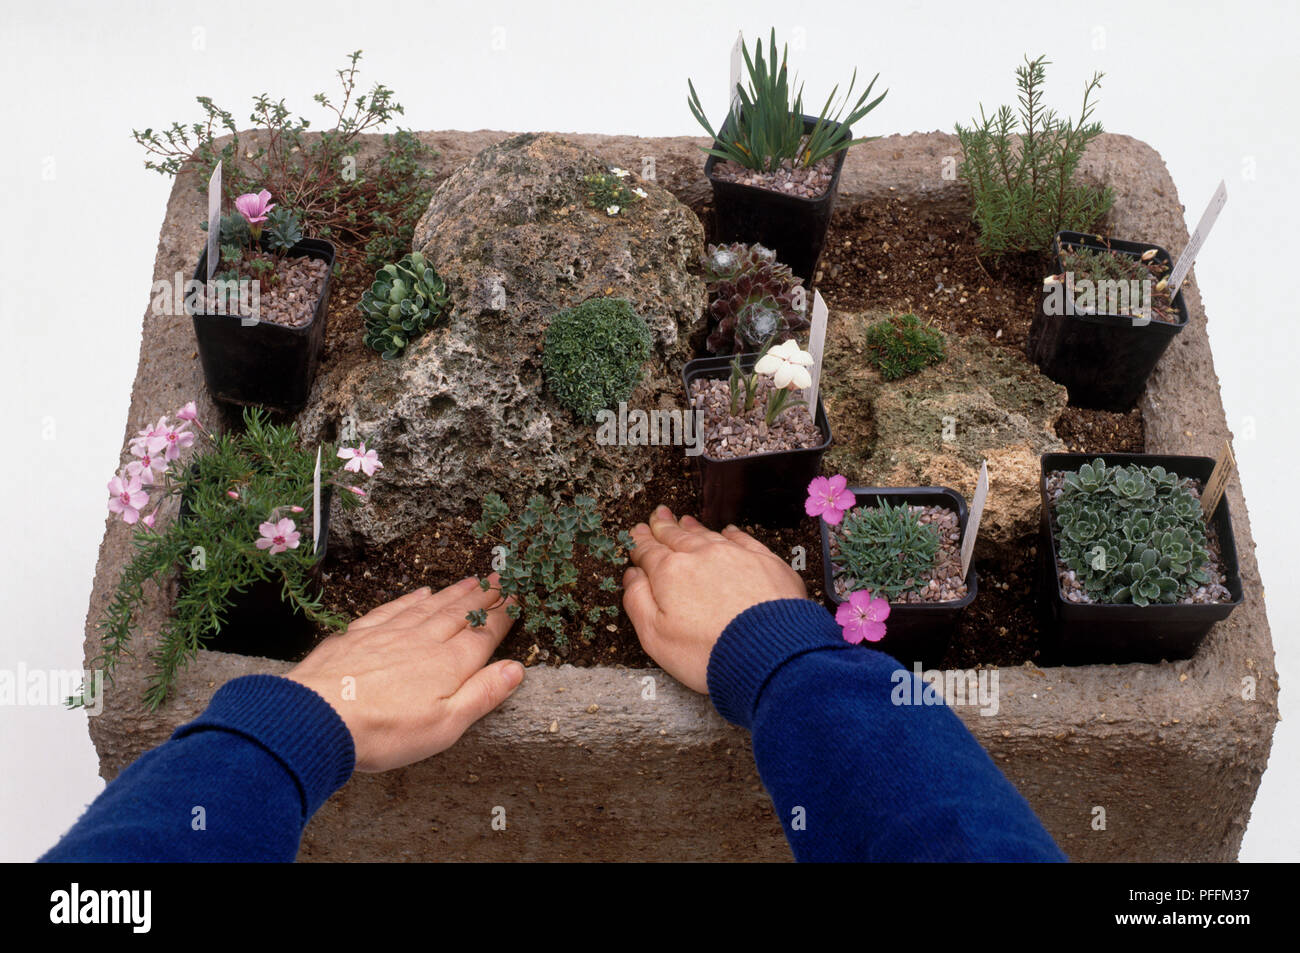 Hands shown planting alpines in trough, including Oxalis, Sempervivum, Saxifrage, Phlox, Helianthemum, Penstemon, close-up Stock Photo